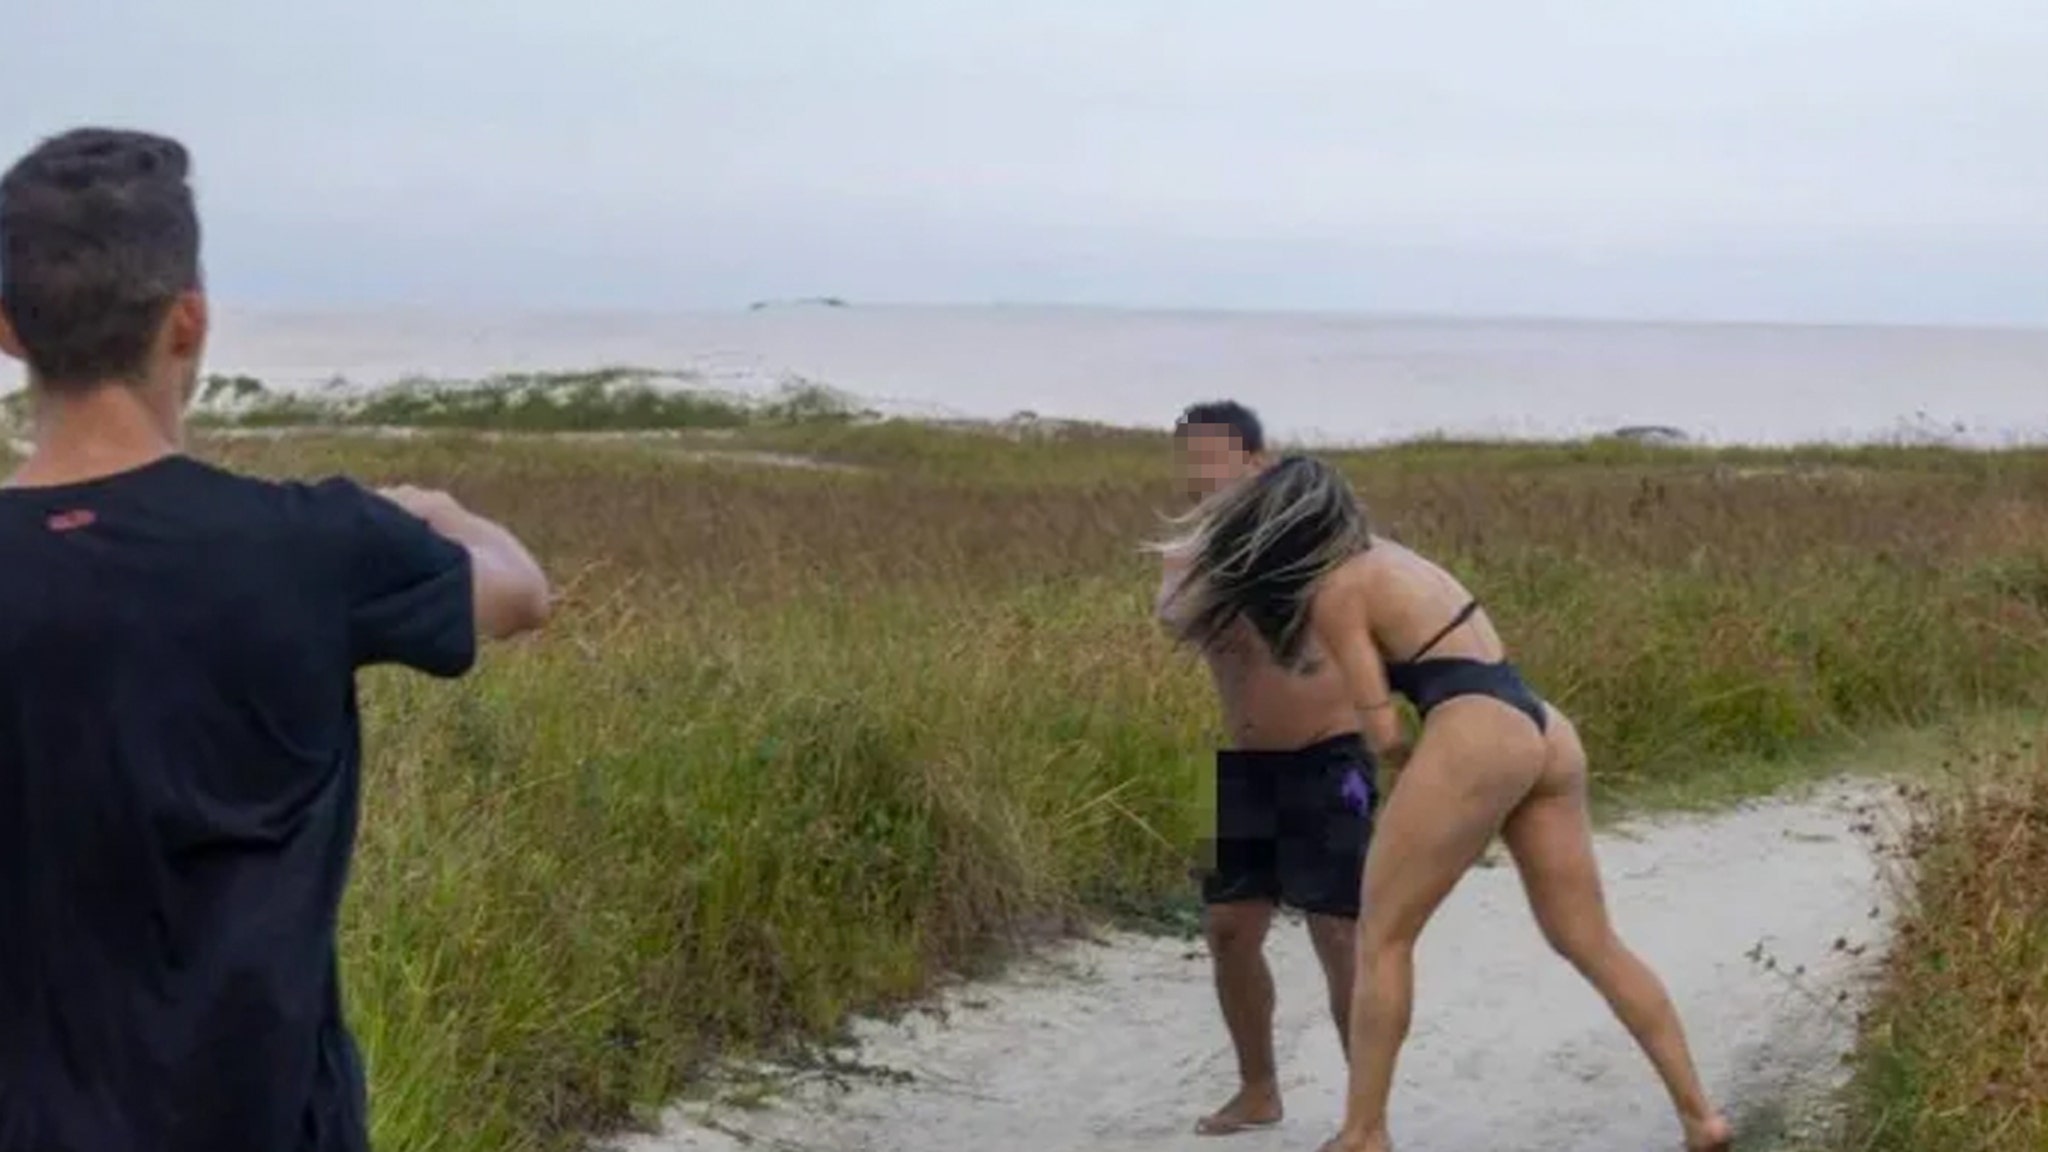 amateury beach game nude